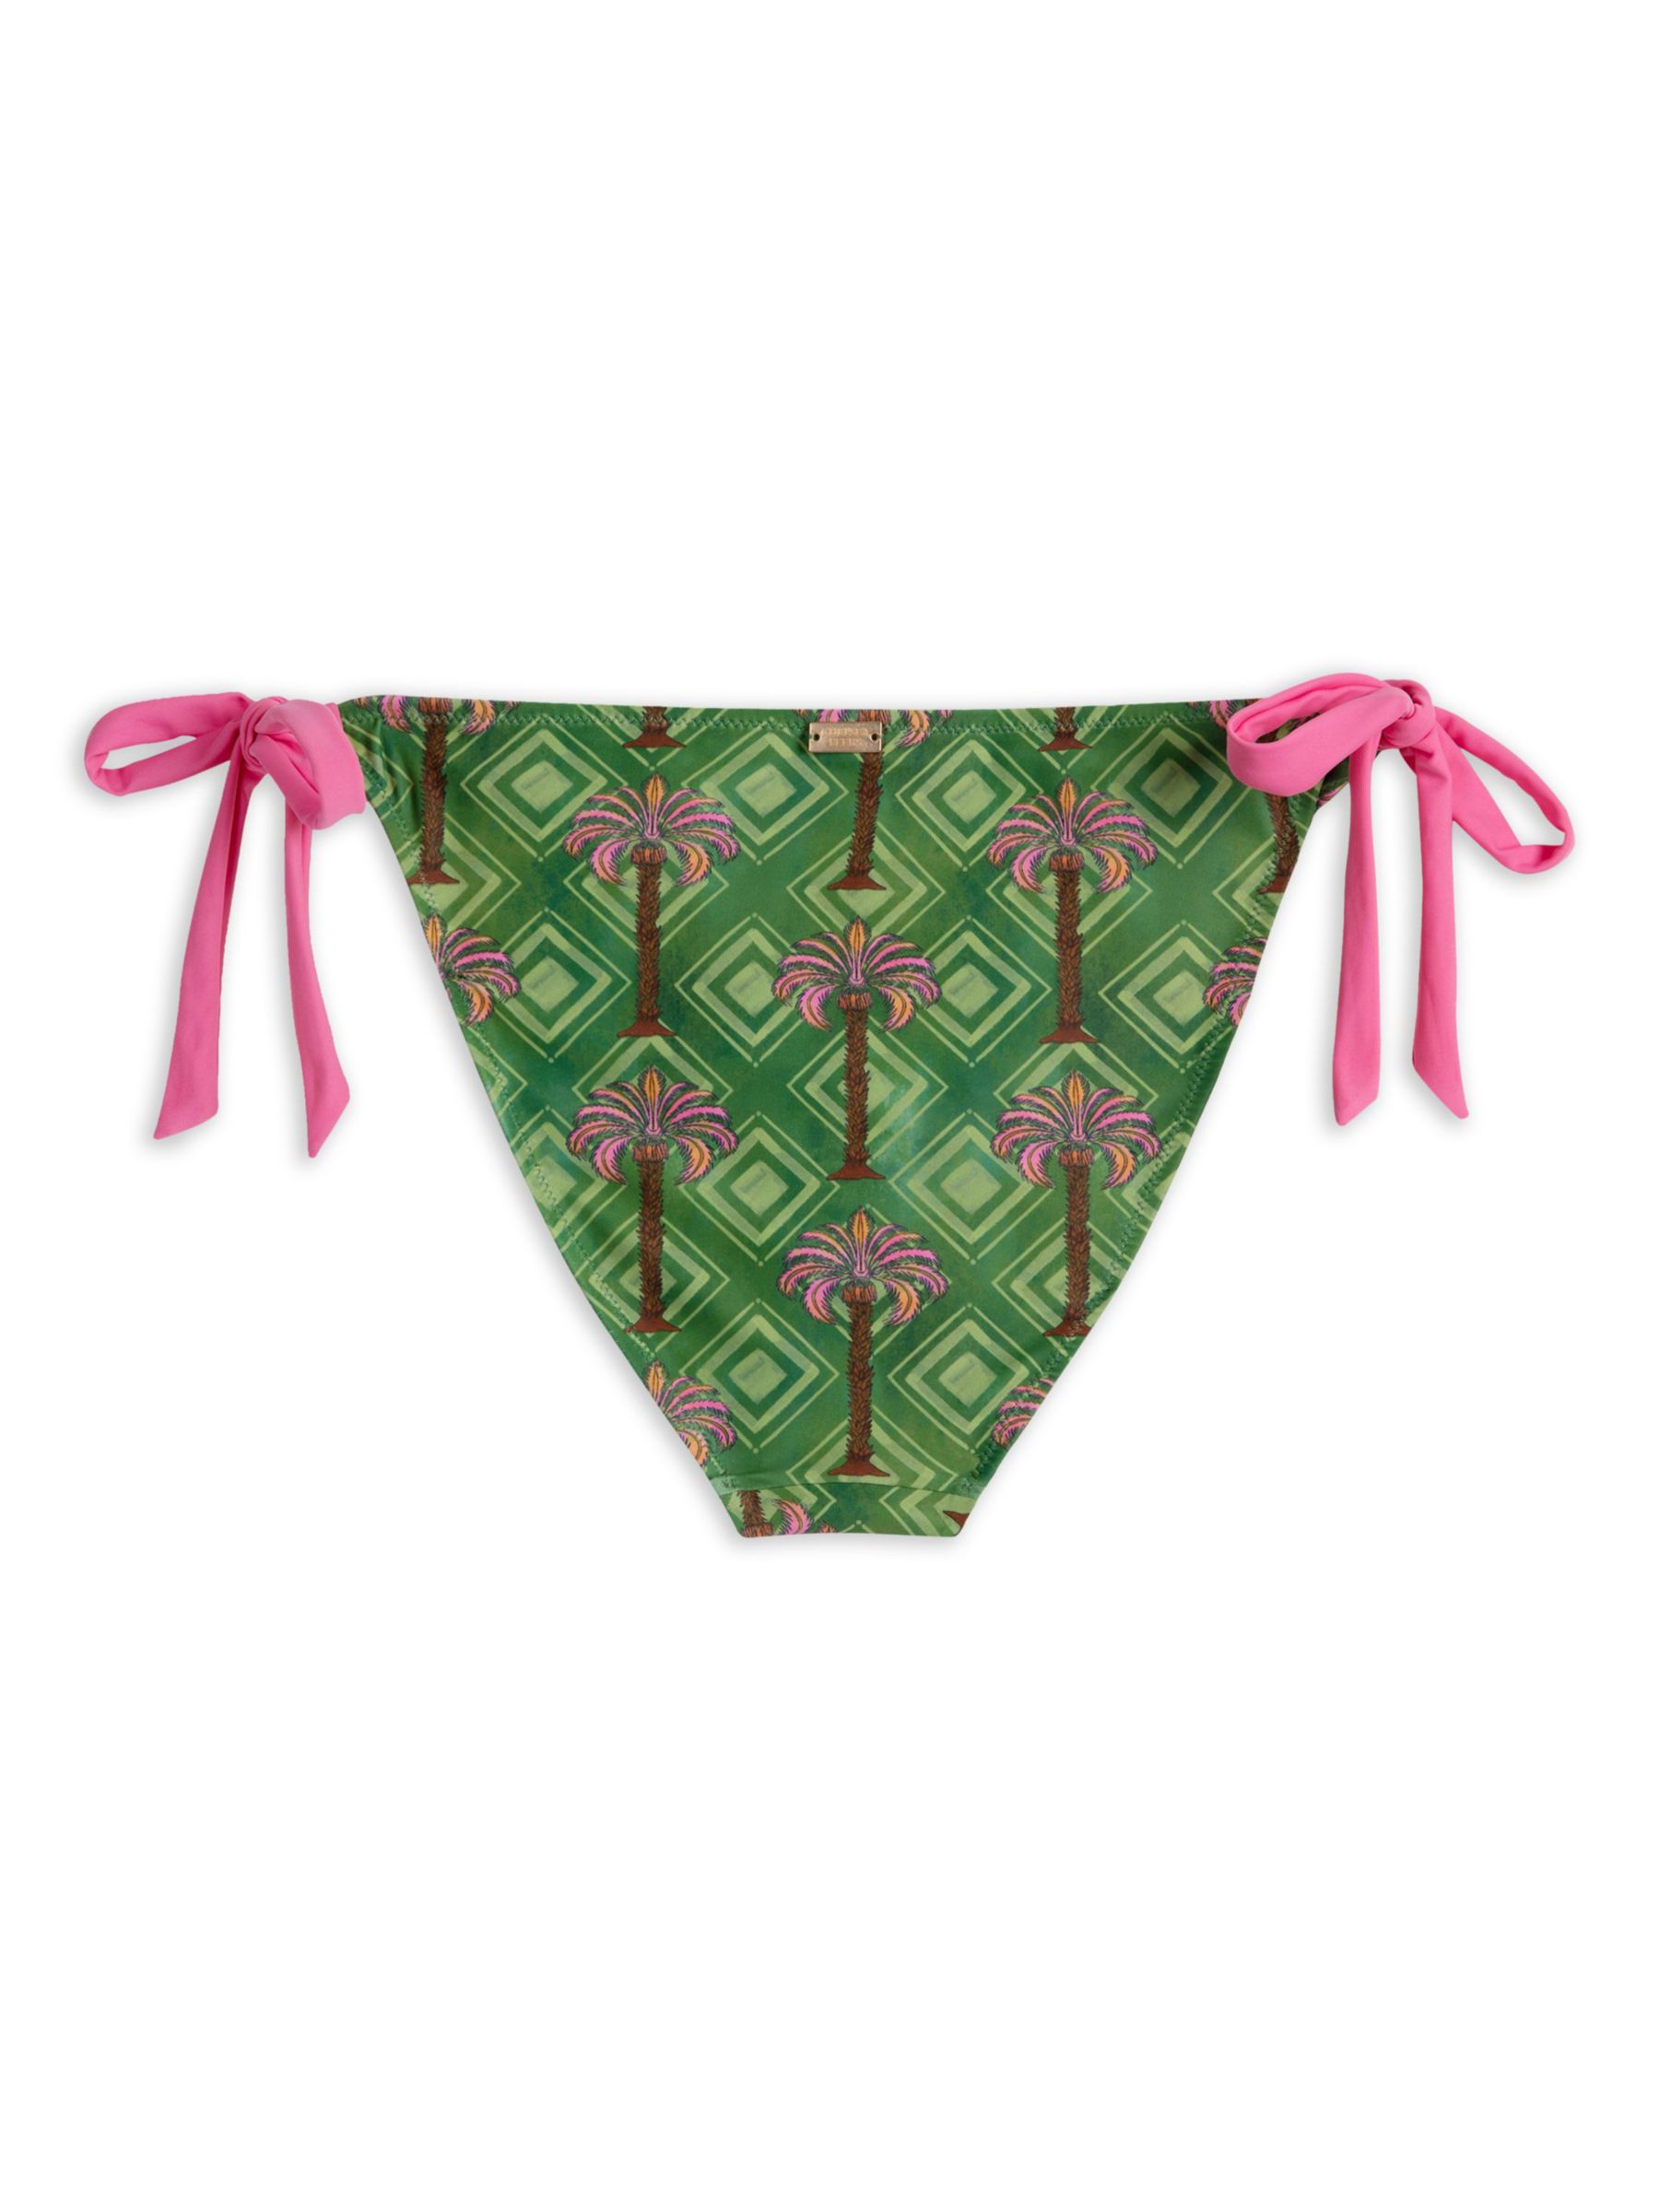 Chelsea Peers Palm Print Tie Side Bikini Bottoms, Khaki/Multi, 6